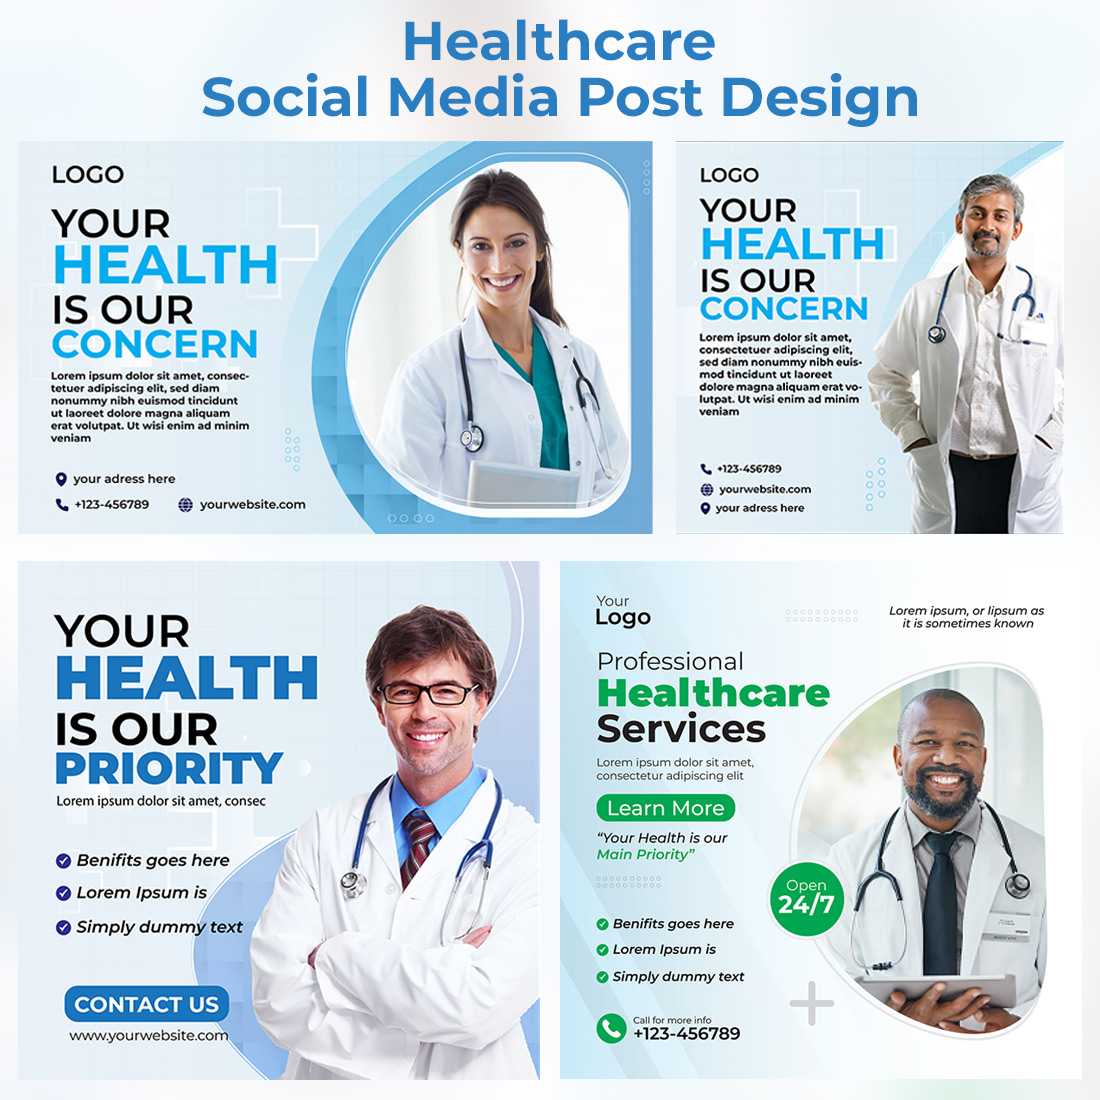 Healthcare social media post design template cover image.